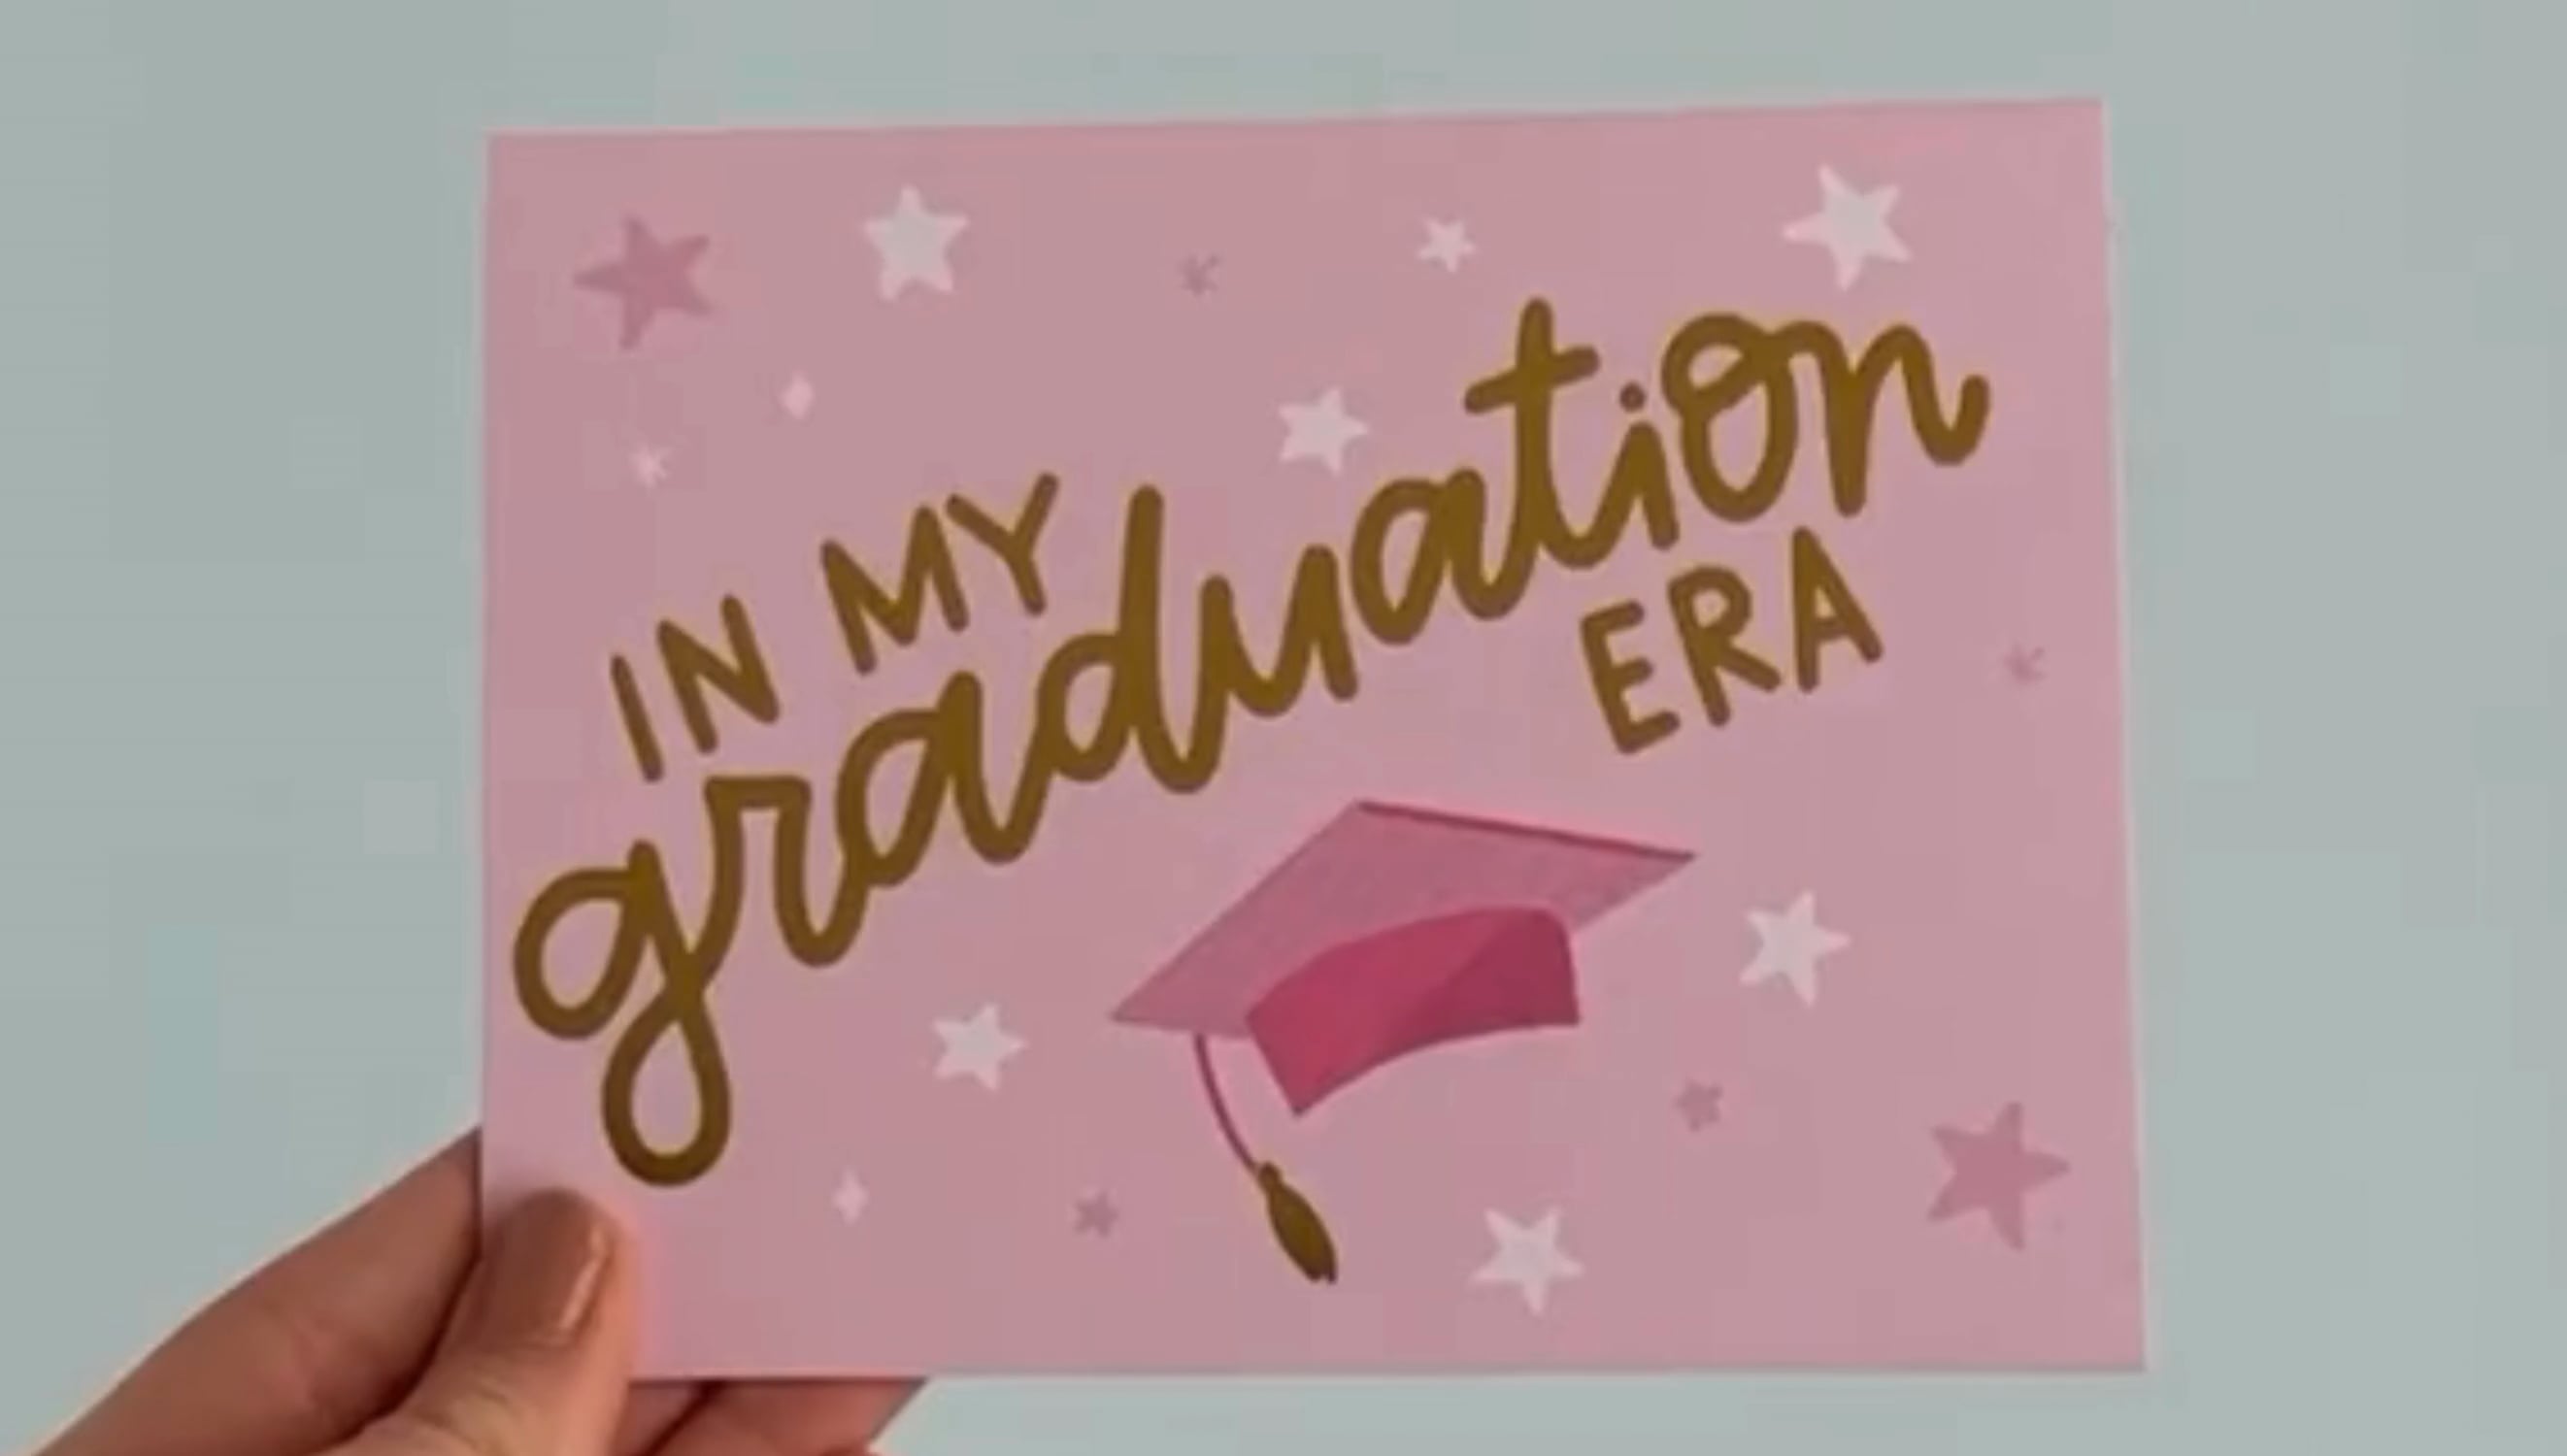 In My Graduation Era Greeting Card video